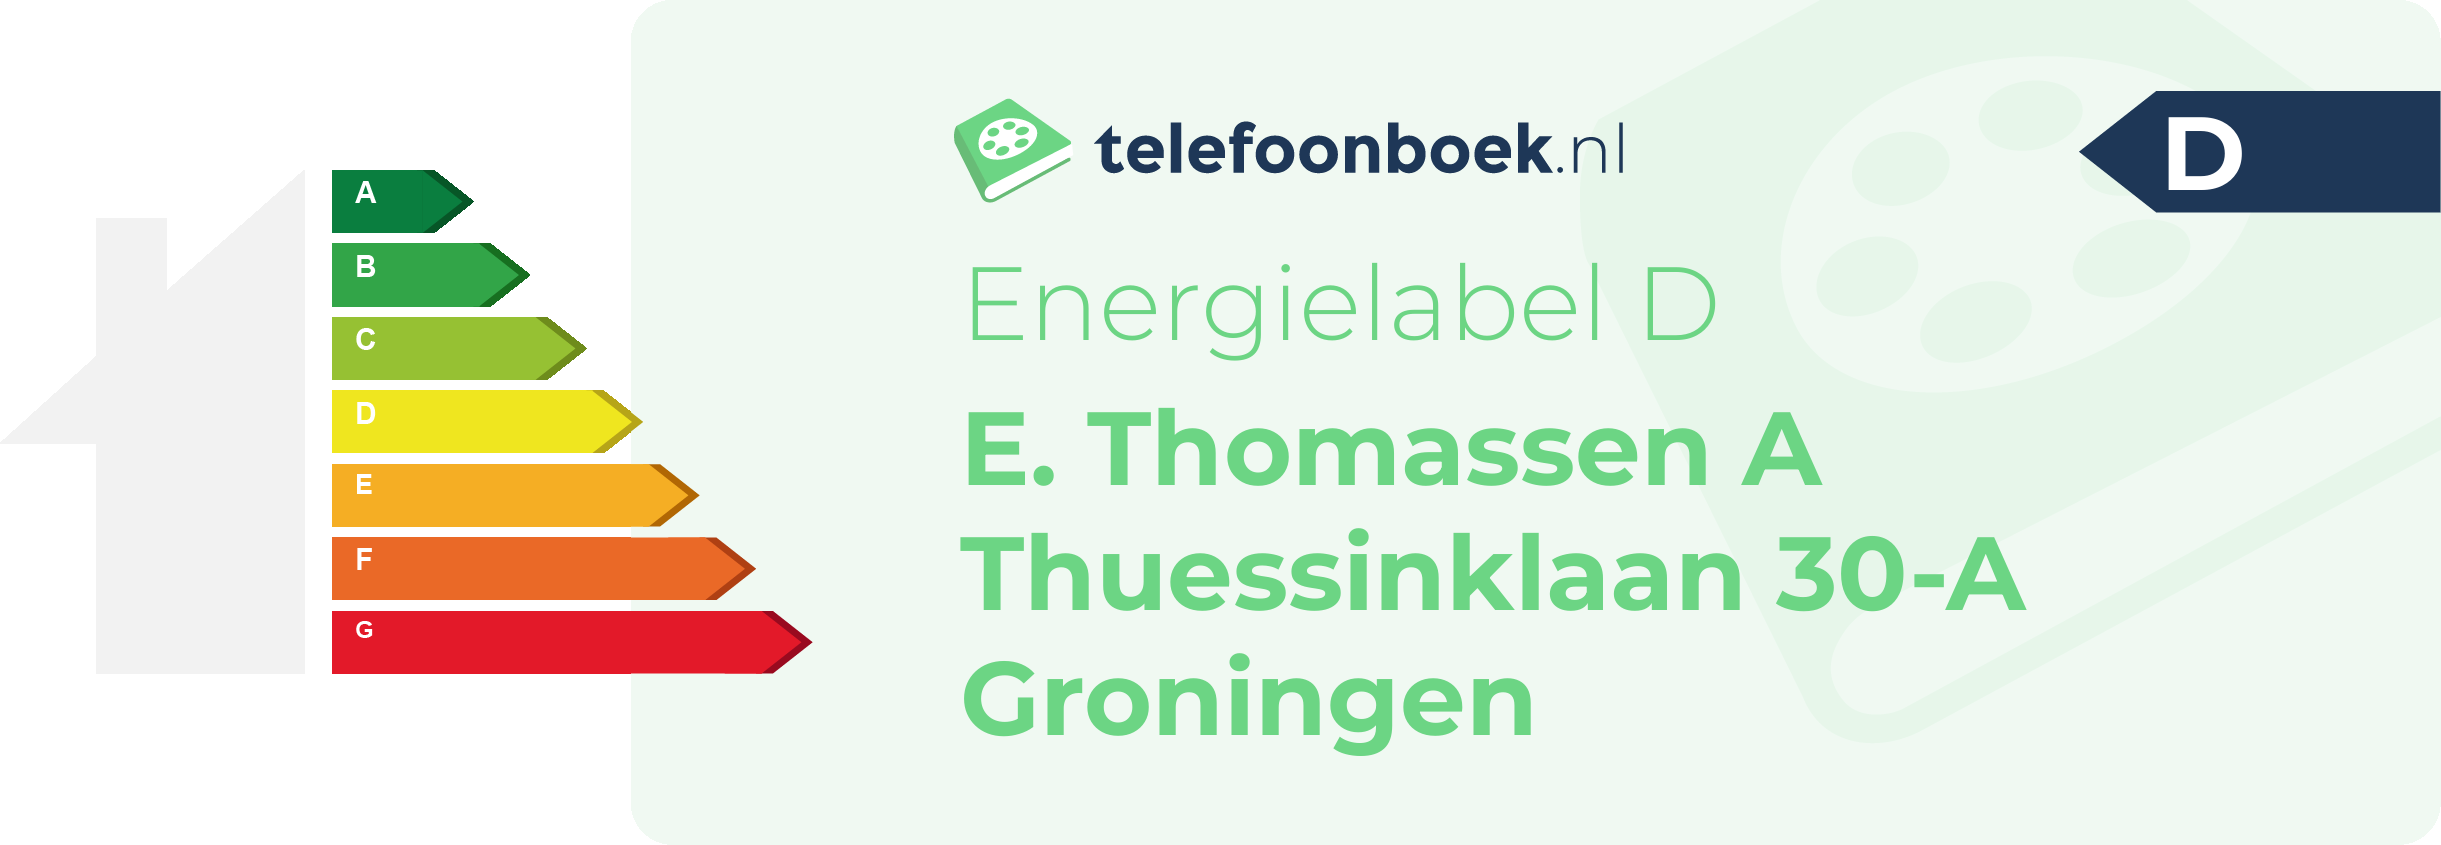 Energielabel E. Thomassen A Thuessinklaan 30-A Groningen